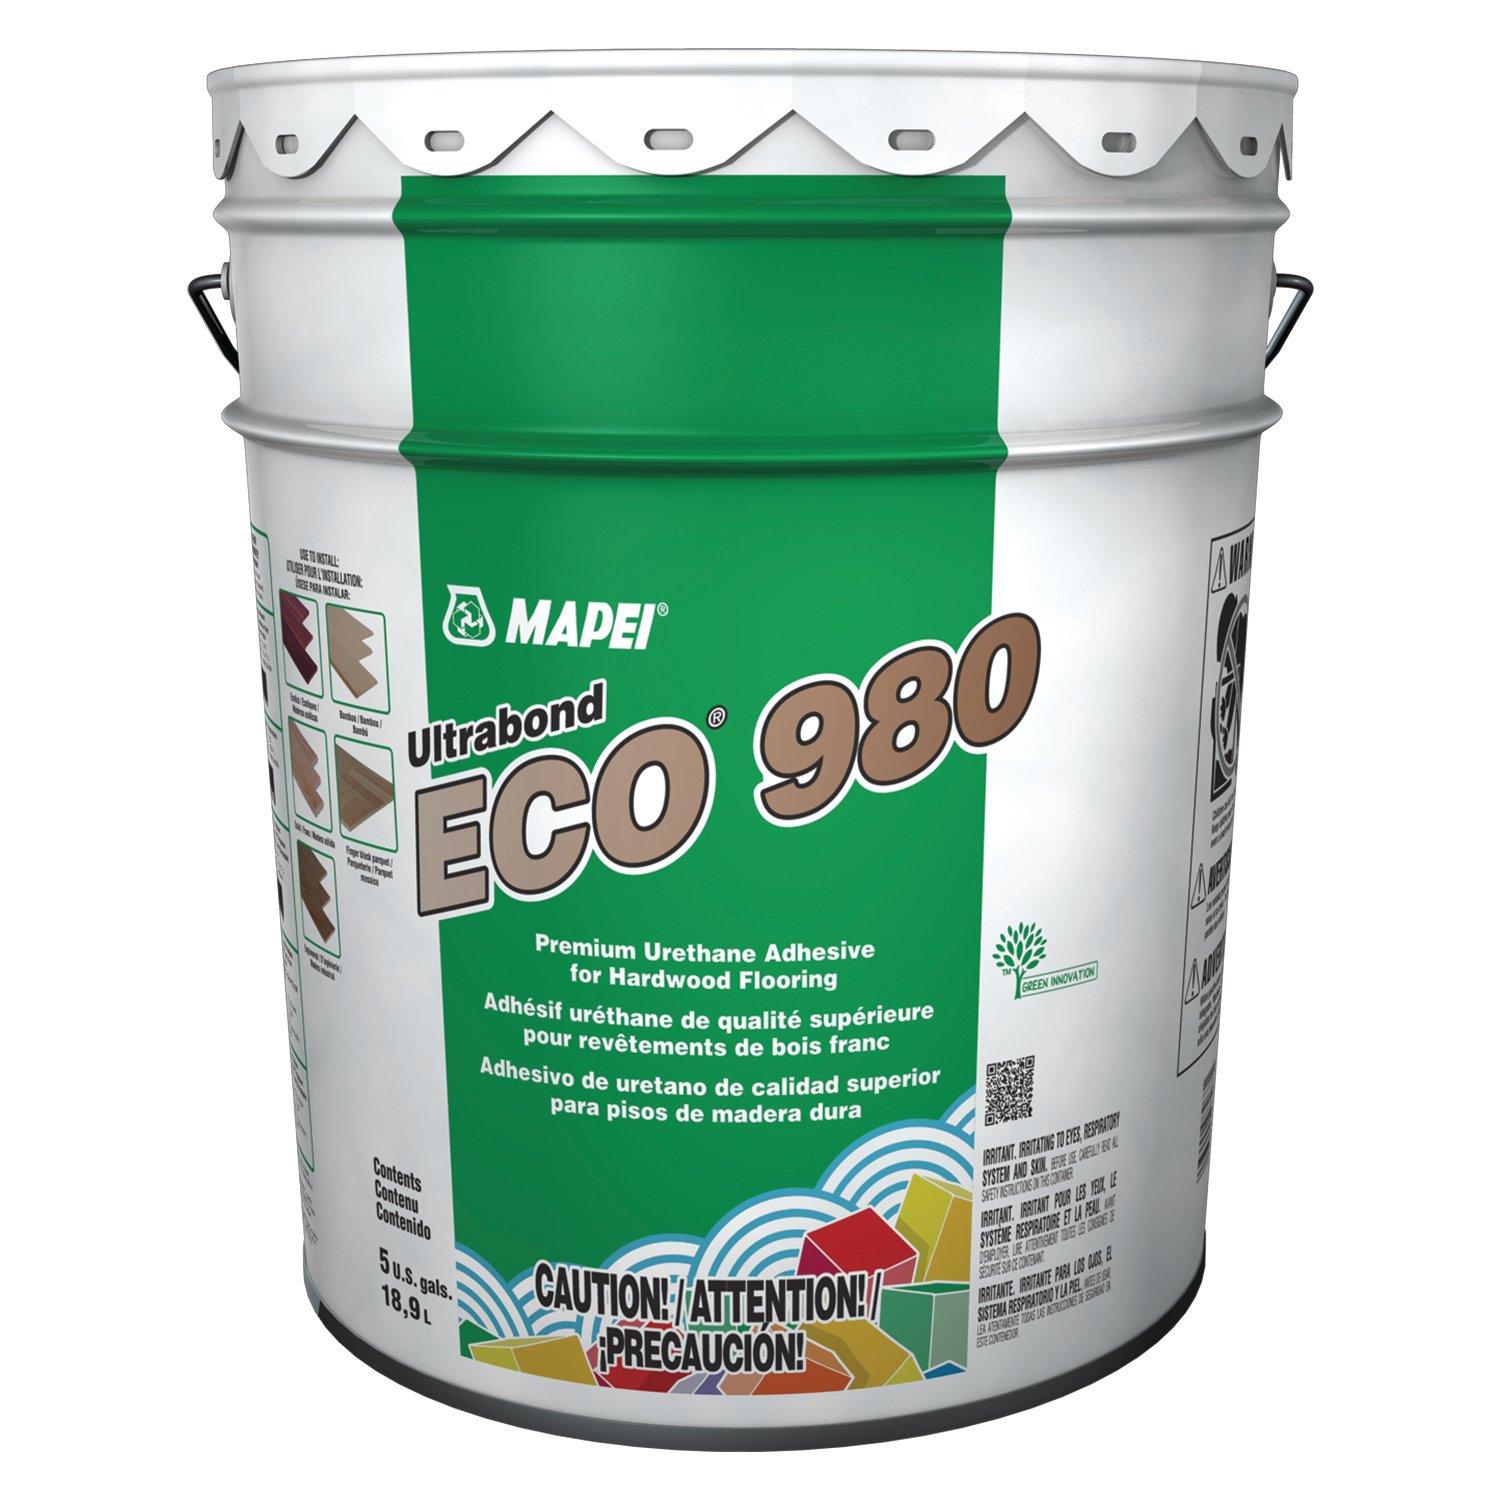 Mapei Ultrabond Eco 980 Wood Flooring, How To Remove Urethane Adhesive From Hardwood Floors